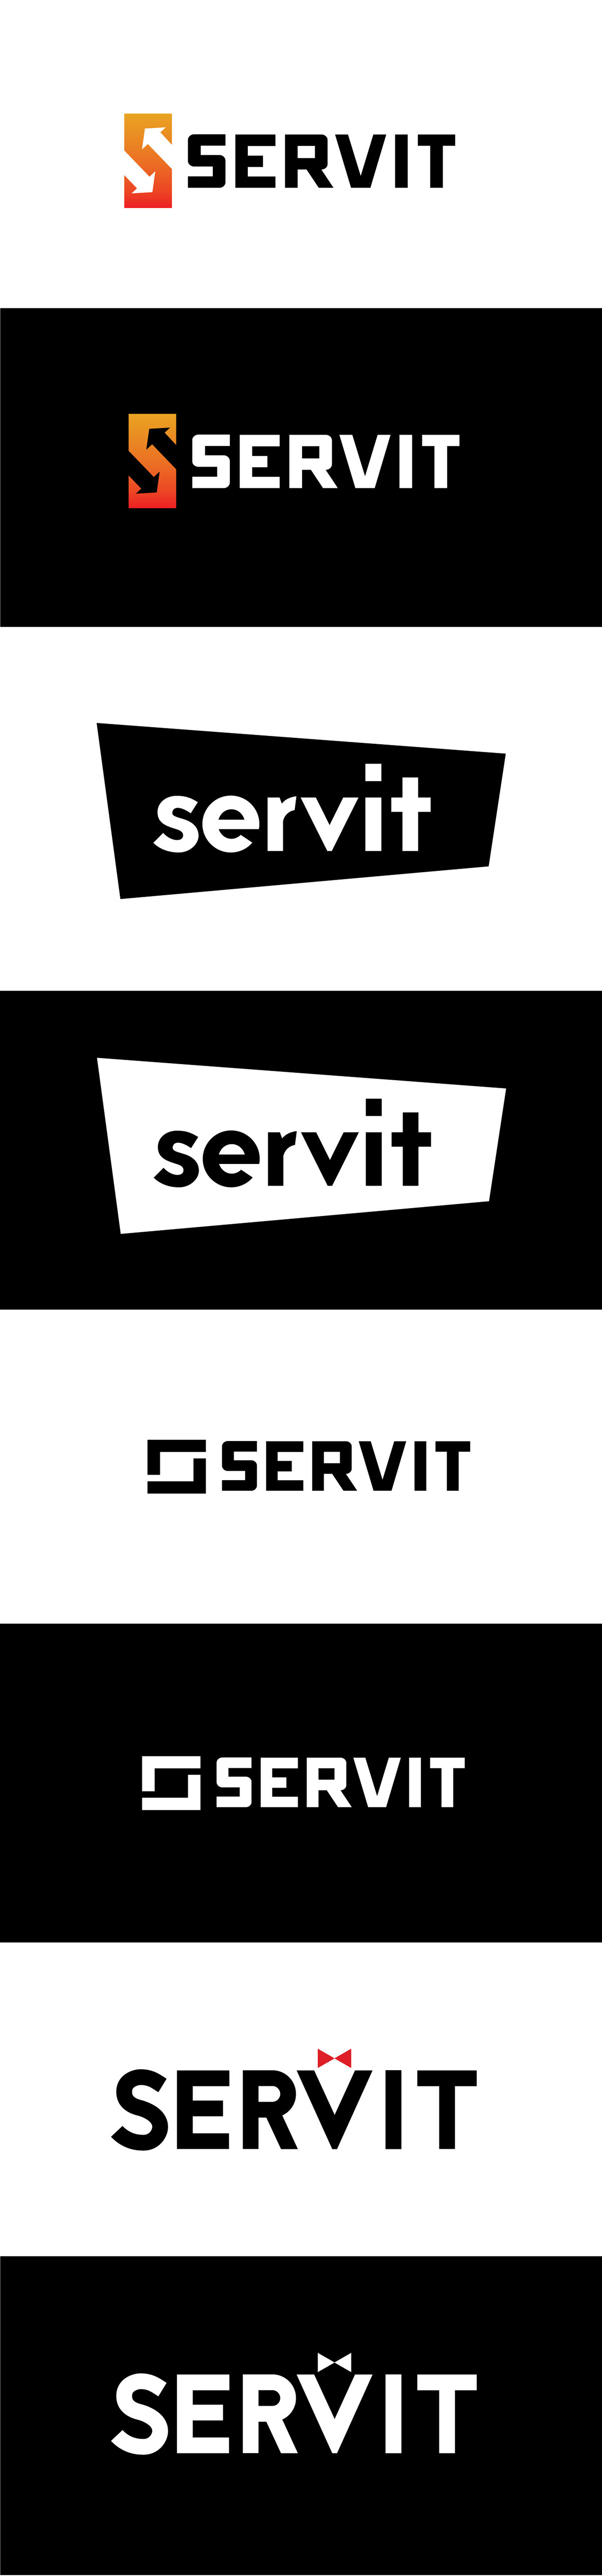 ServIT logo Icon Illustrator clean